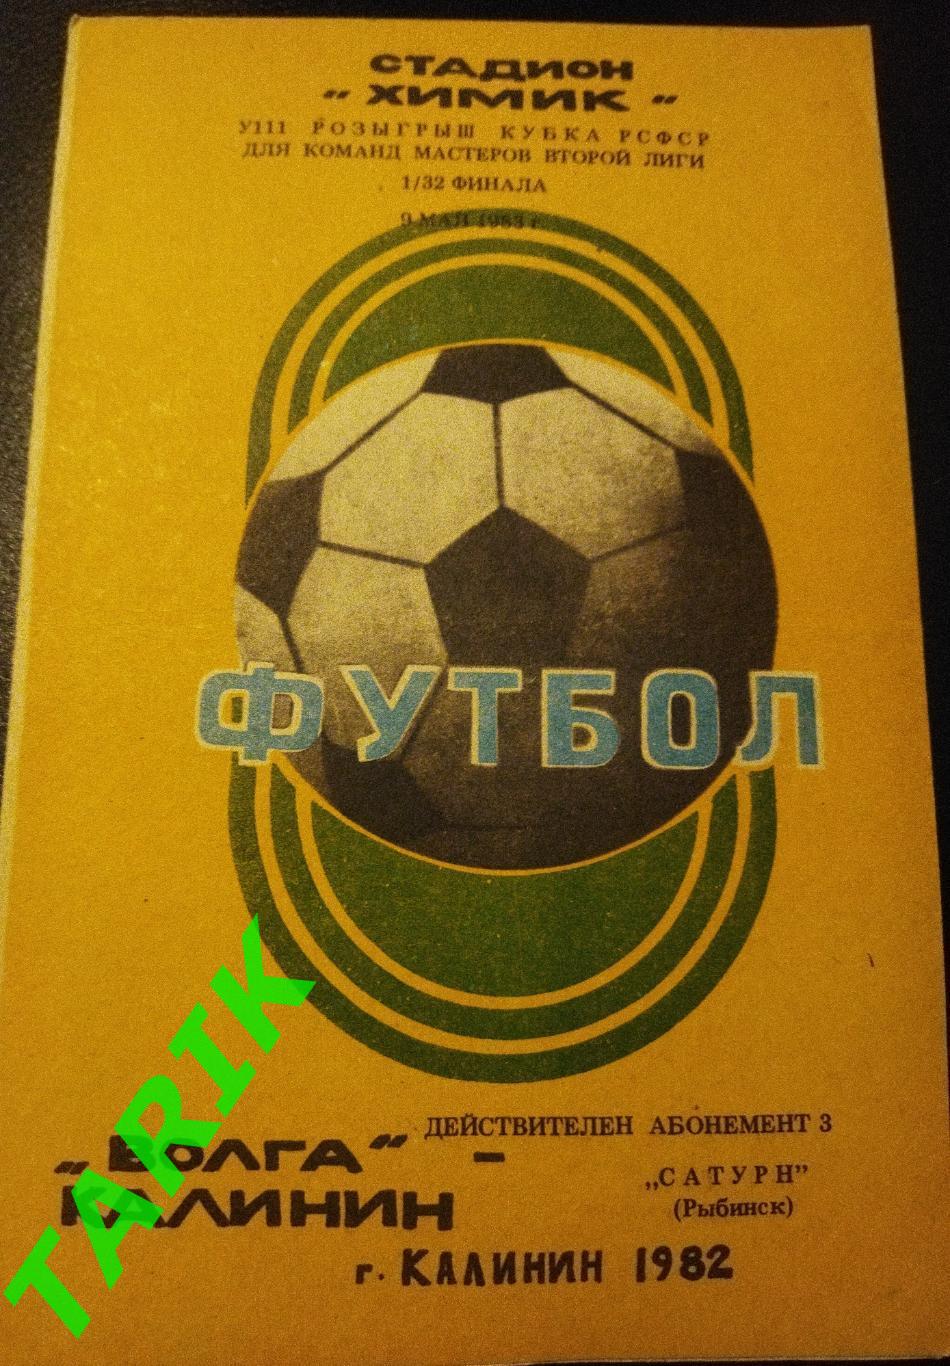 Волга Калинин - Сатурн Раменское 1983 (Кубок РСФСР)